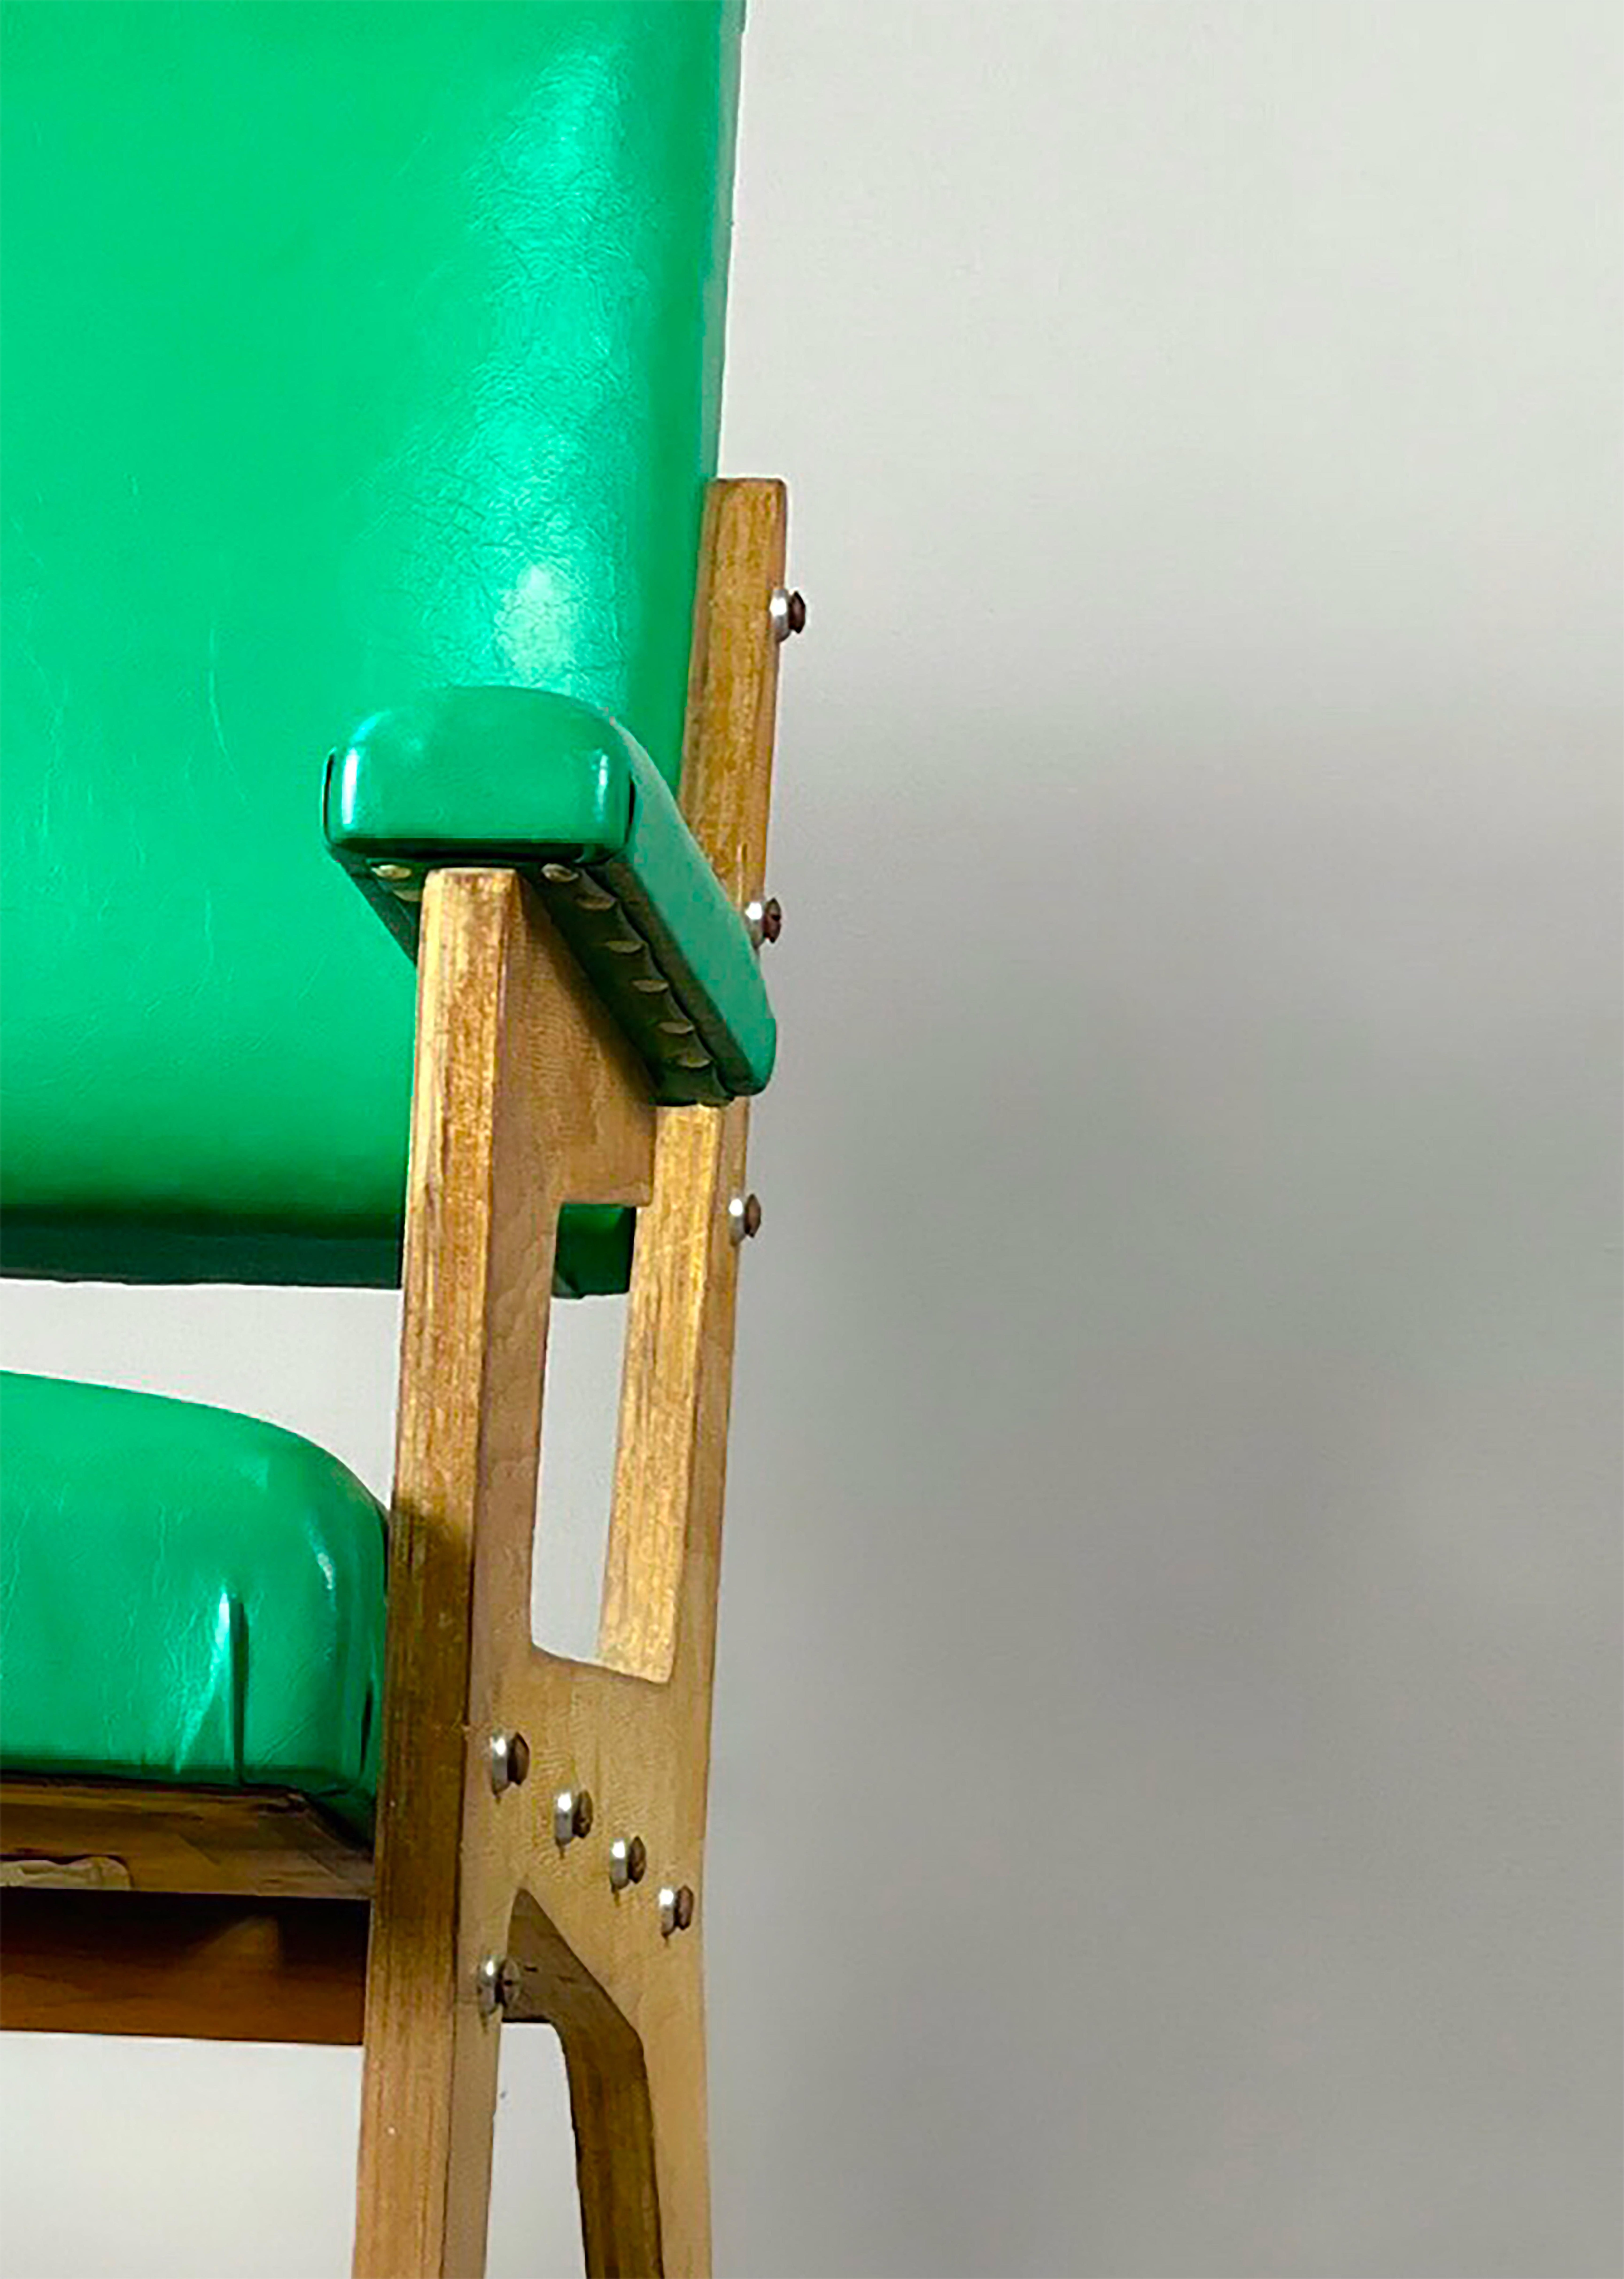 Model H armchair made of naval plywood with green courvin upholstery and metal finishes. Artistic Furniture - São José dos Campos, Brazil, c. 1950. Bibliography: Carvalho, Amanda Beatriz Palma de; Cavalcanti, Lauro; Santos, Maria Cecília Loschiavo